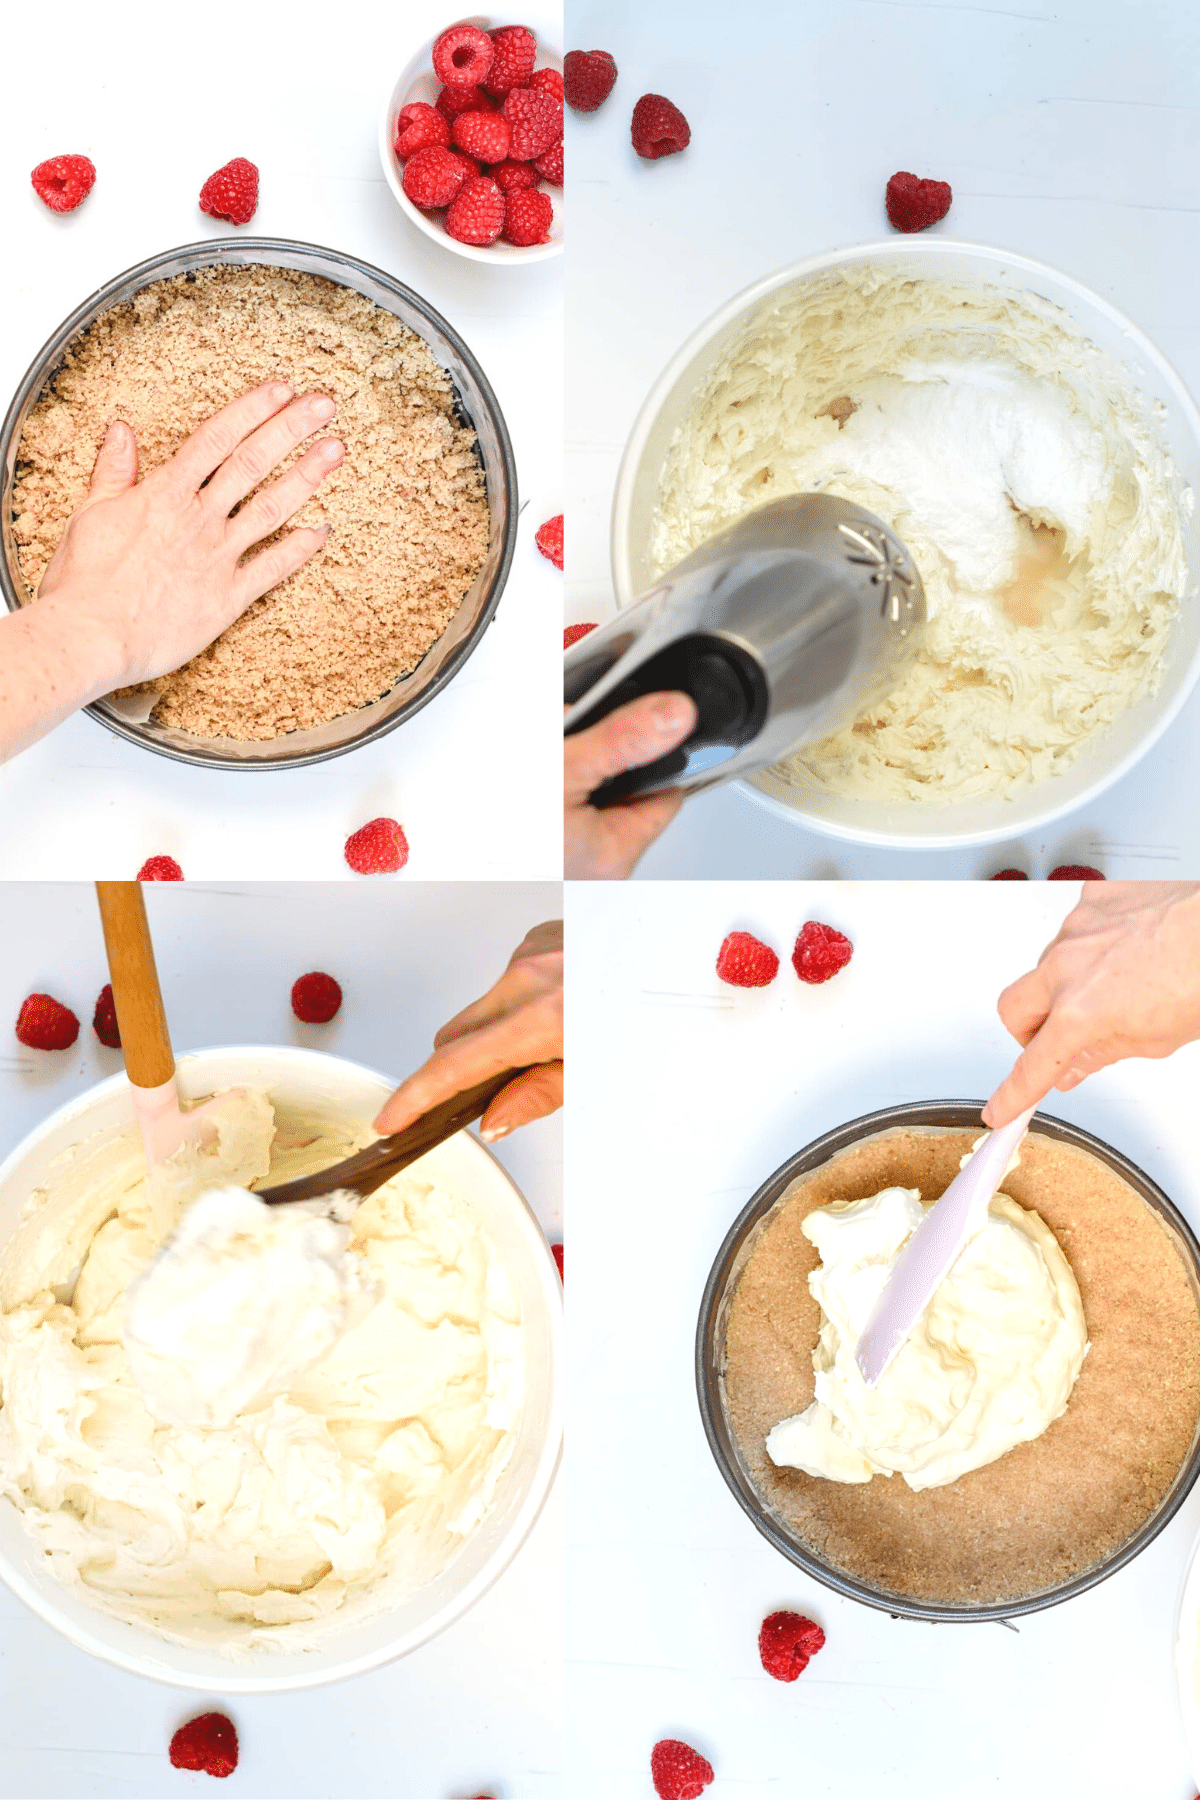 How to make keto no bake cheesecake